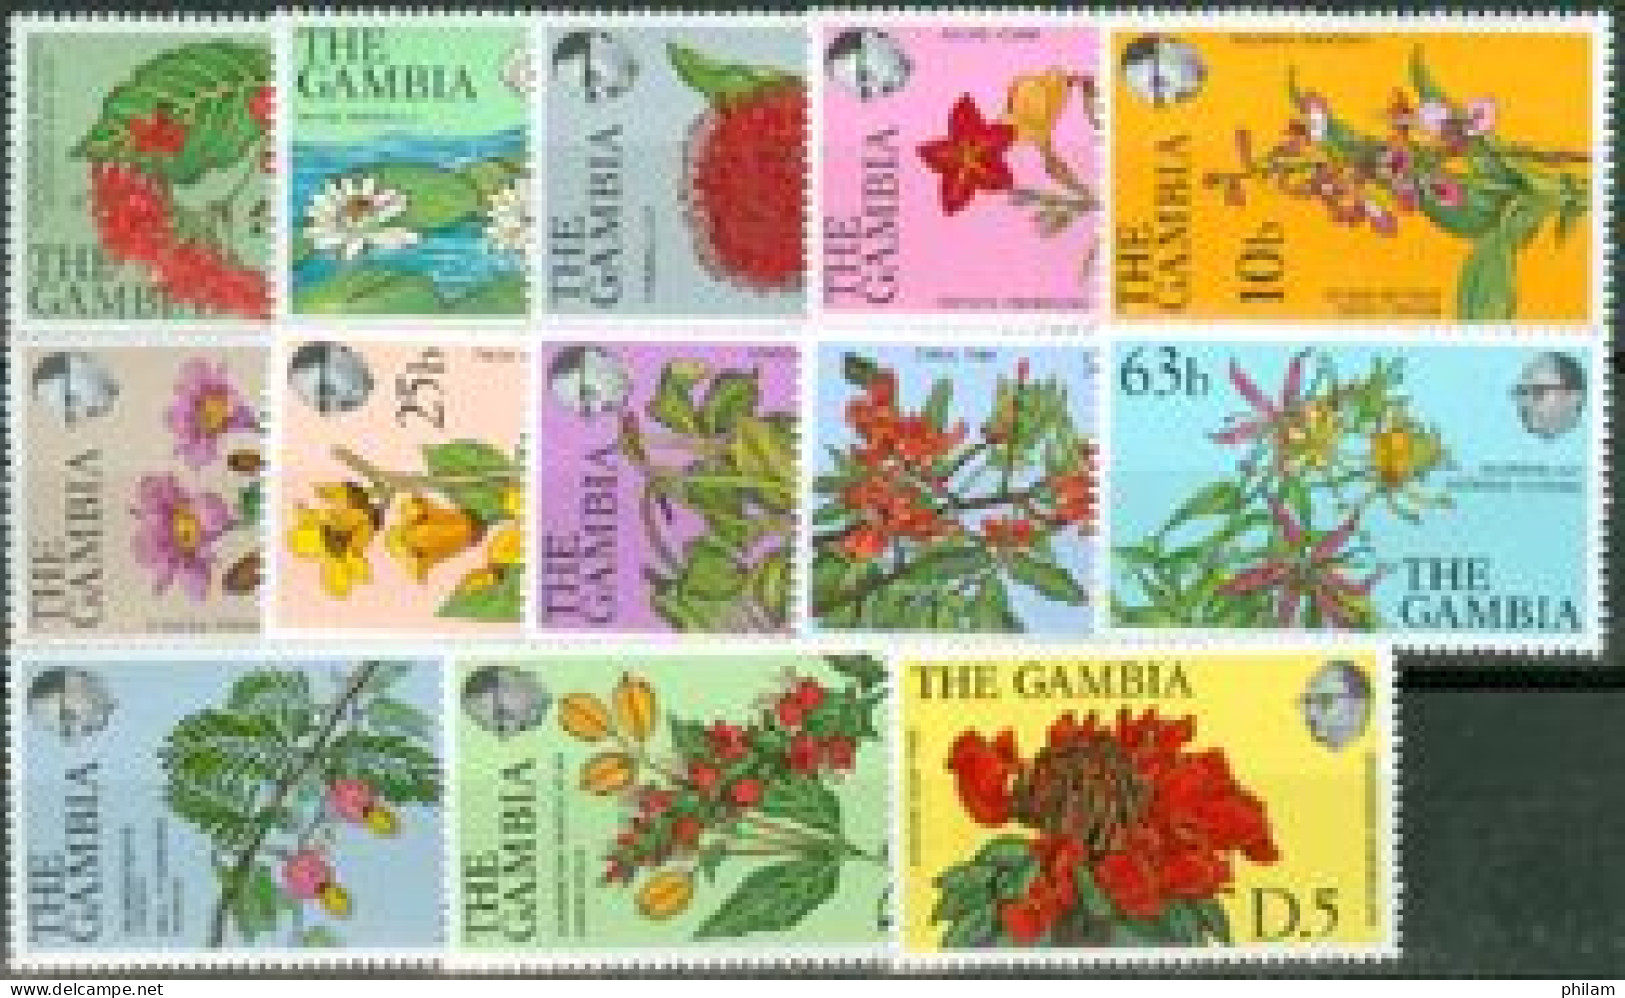 GAMBIE 1977 - Plantes Et Fleurs - 13 V. - Gambie (1965-...)